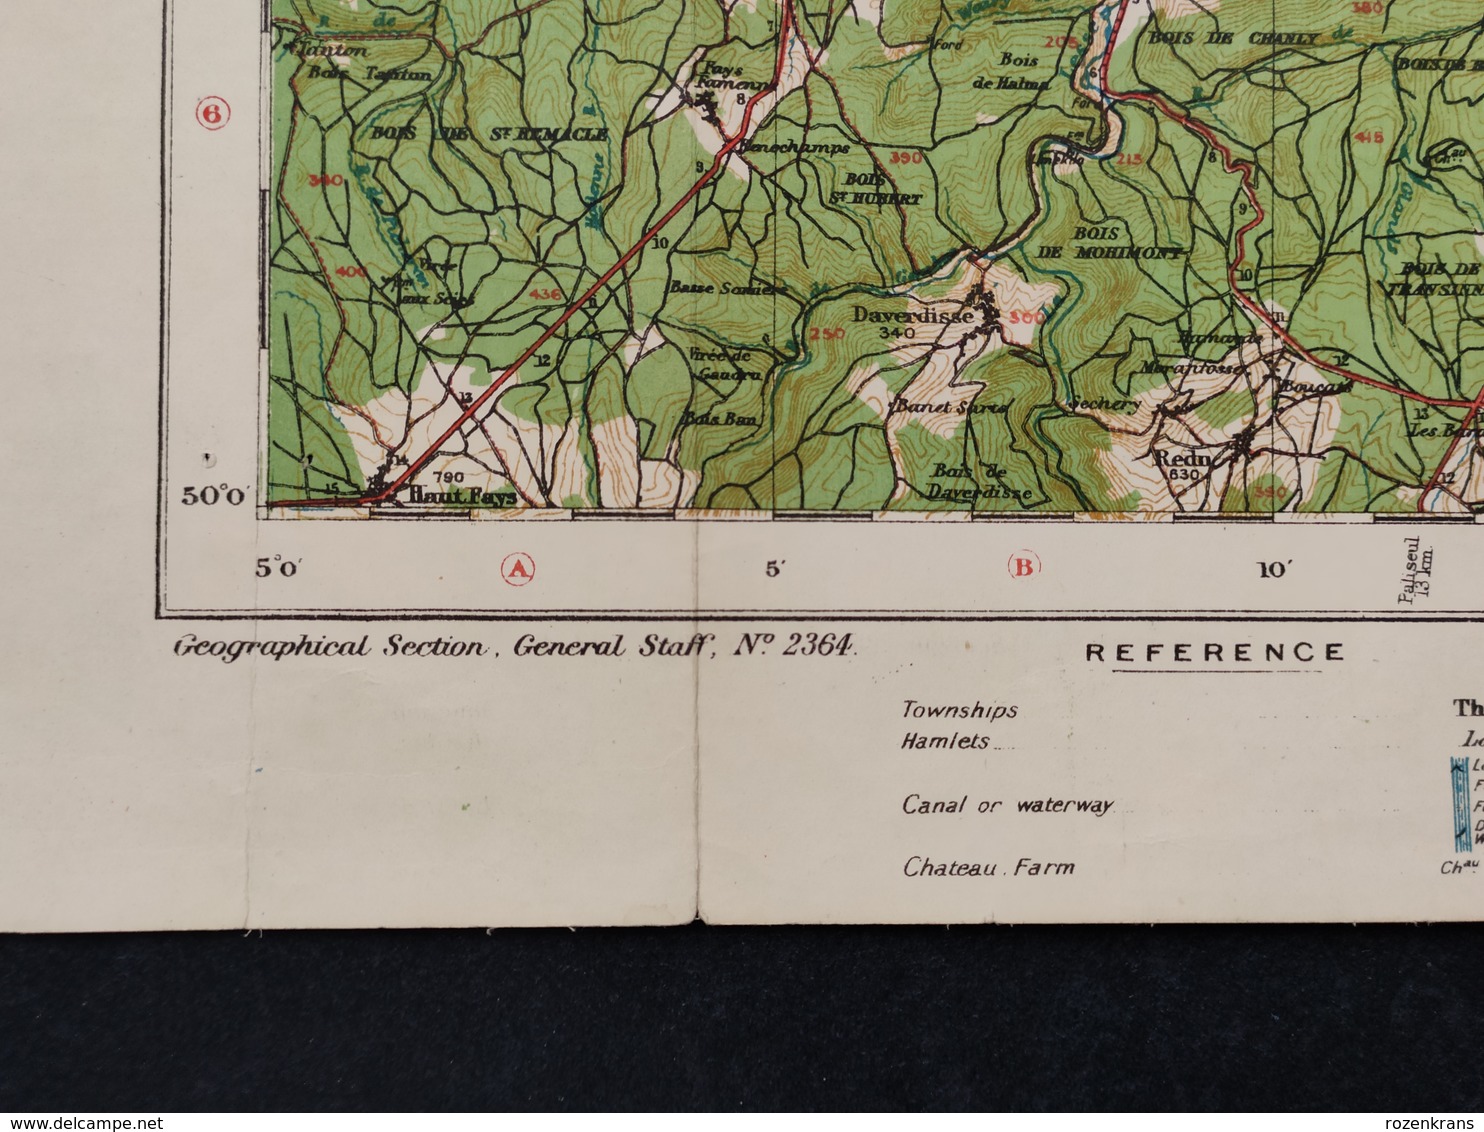 Carte Topographique Militaire UK War Office 1919 World War 1 WW1 Marche Durbuy Houffalize Rochefort Laroche Stavelot